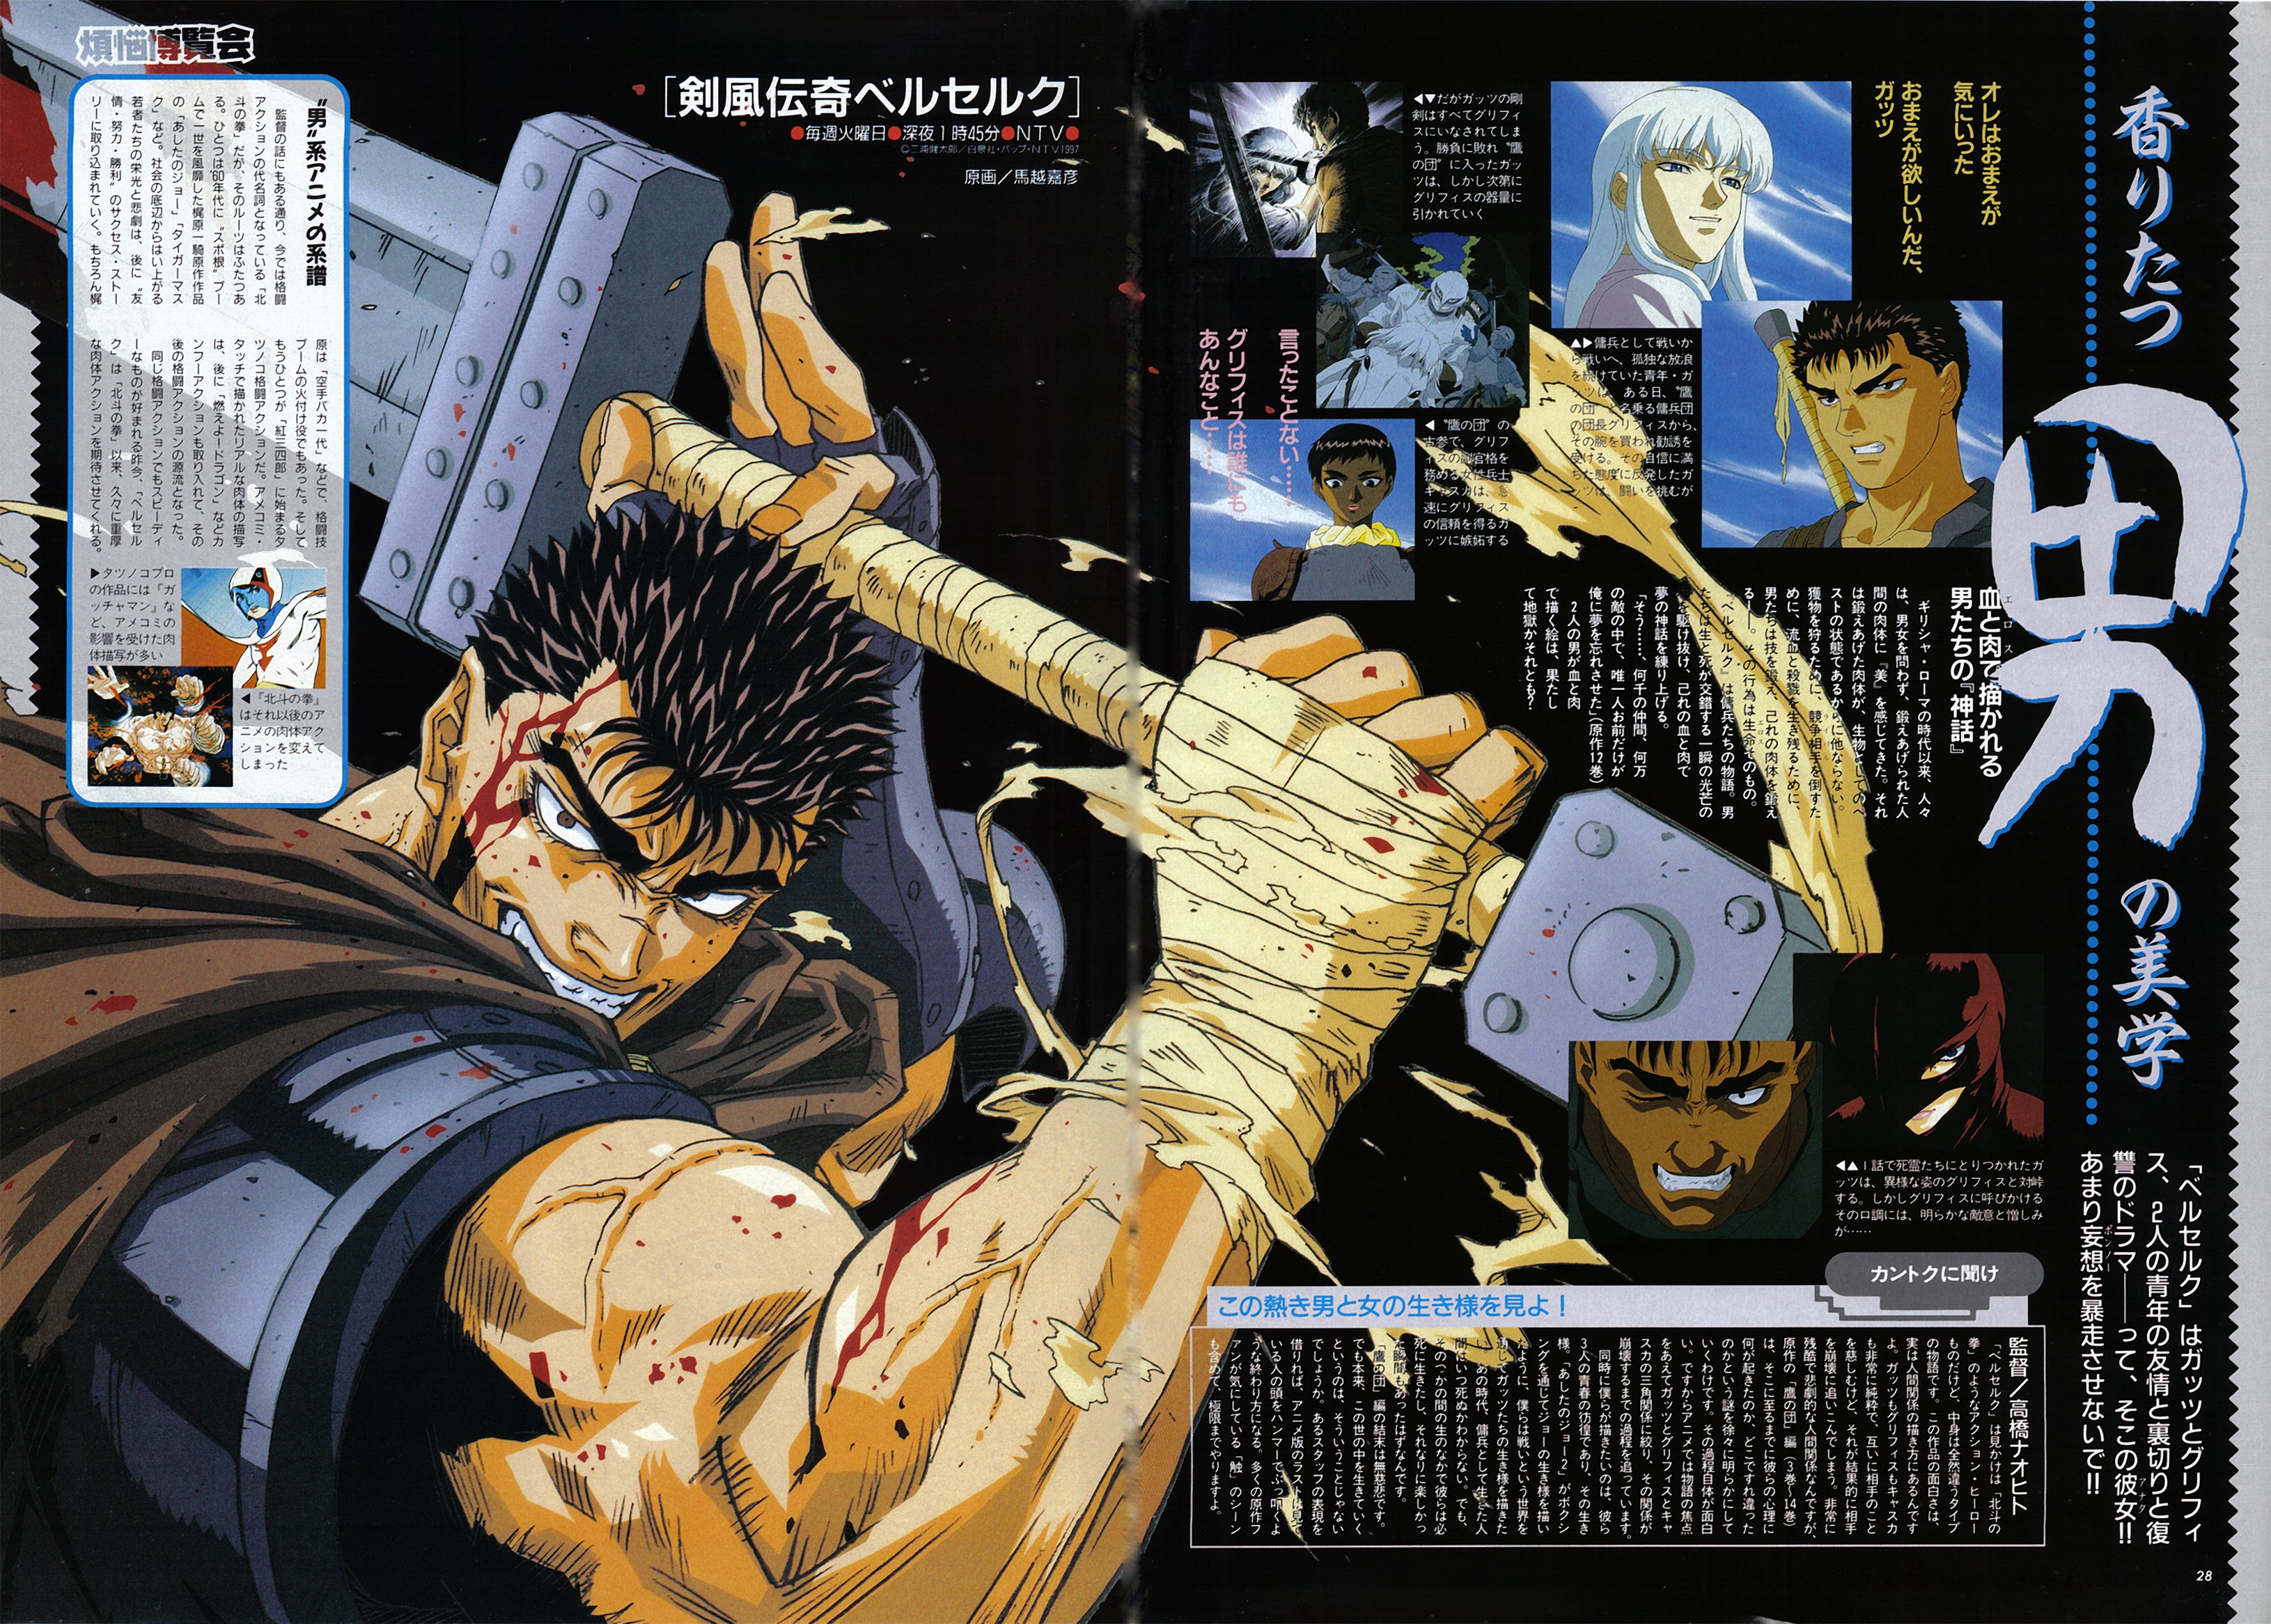 Kentaro Miura Art ⚔ on X: 1997 Anime - Ep. 1, Stitch 35 #ベルセルク #berserk  #berserkart #miuraart #kentaromiura #三浦建太郎 #guts #ガッツ   / X